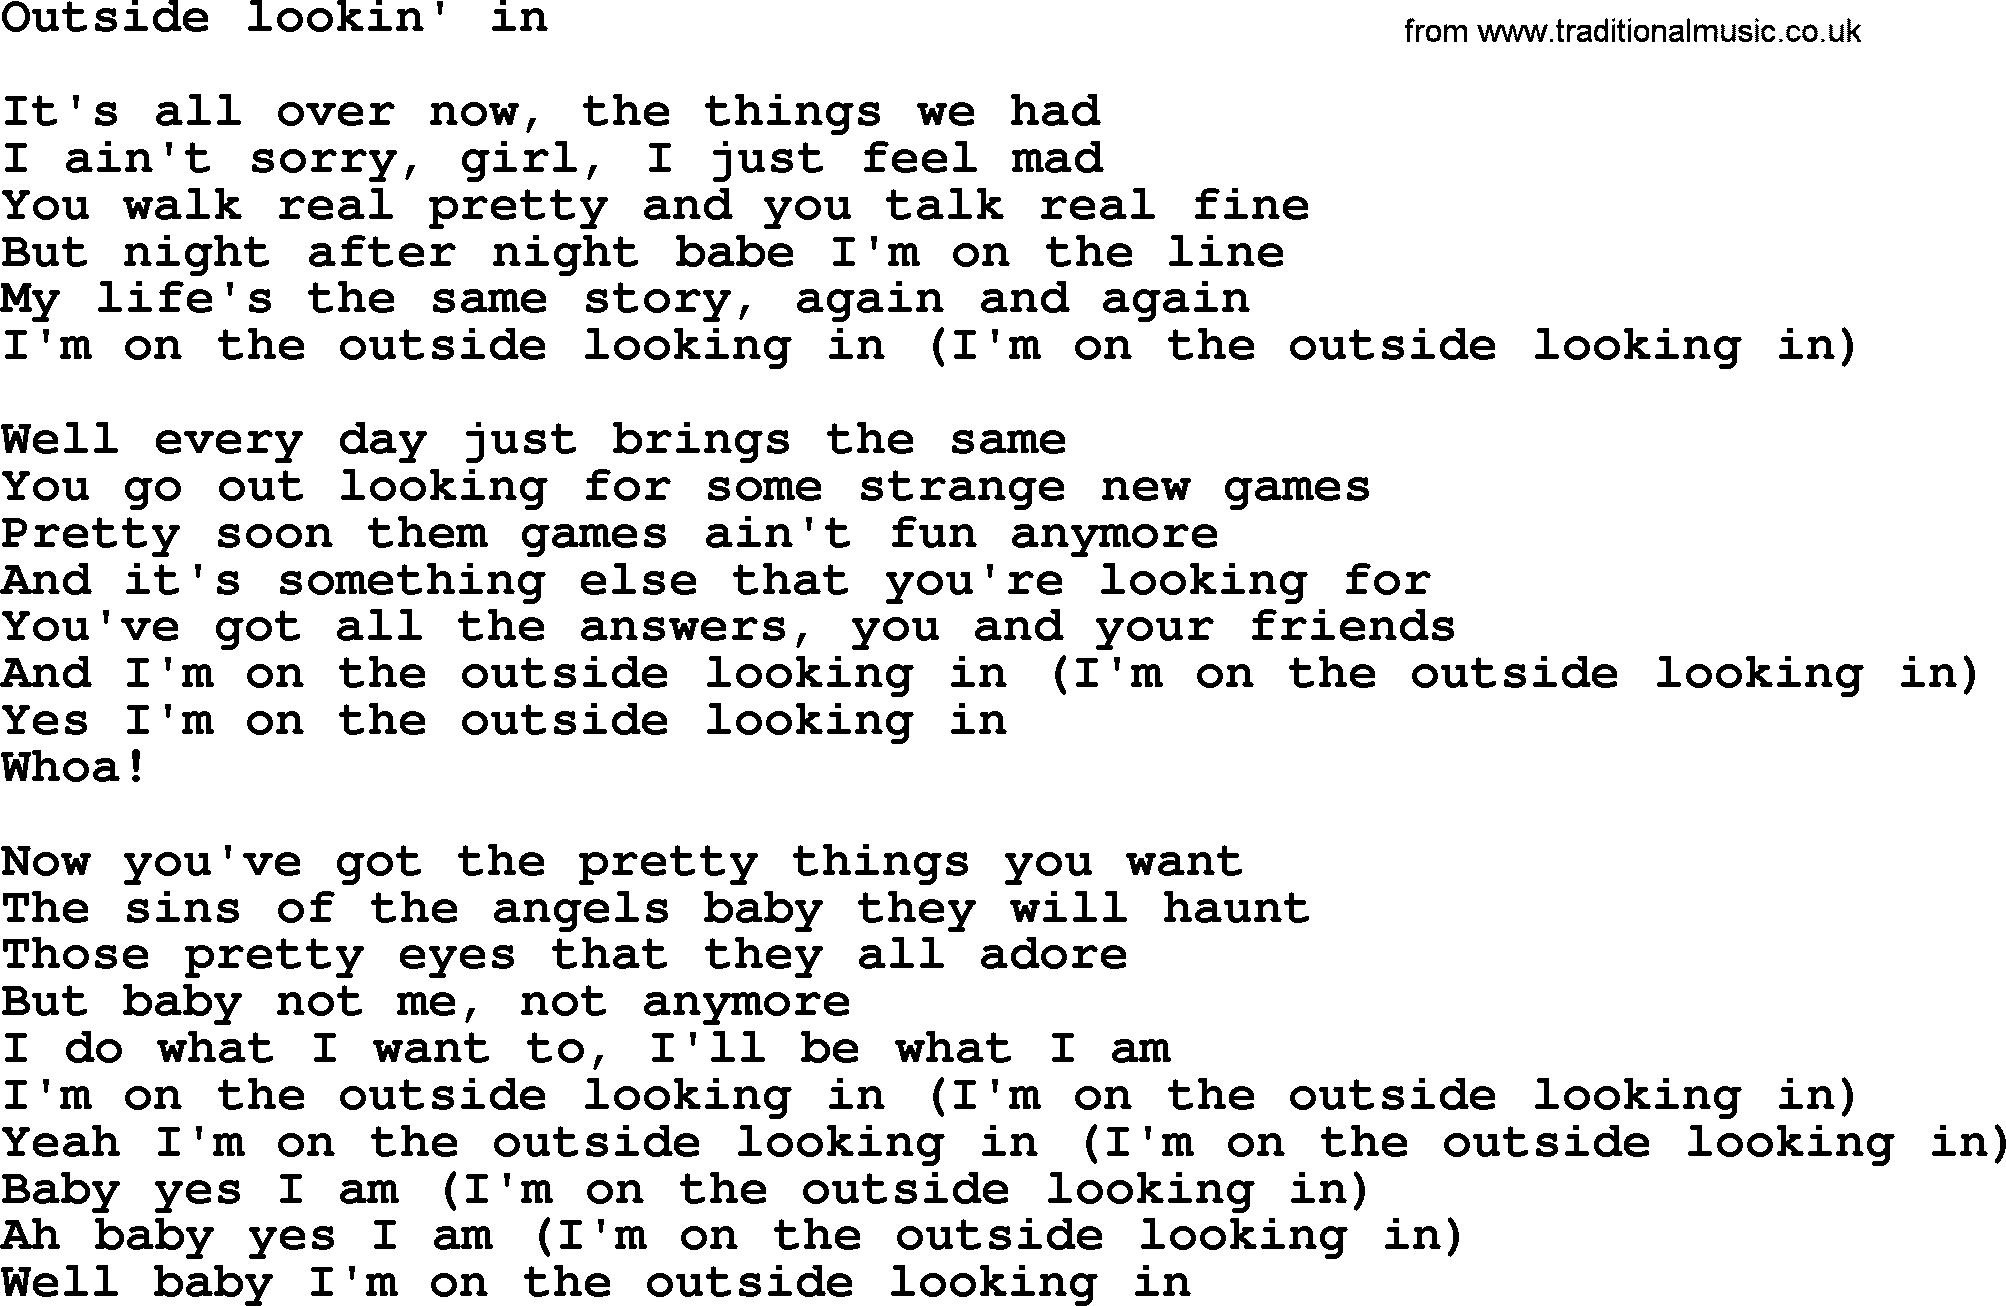 Bruce Springsteen song: Outside Lookin' In lyrics